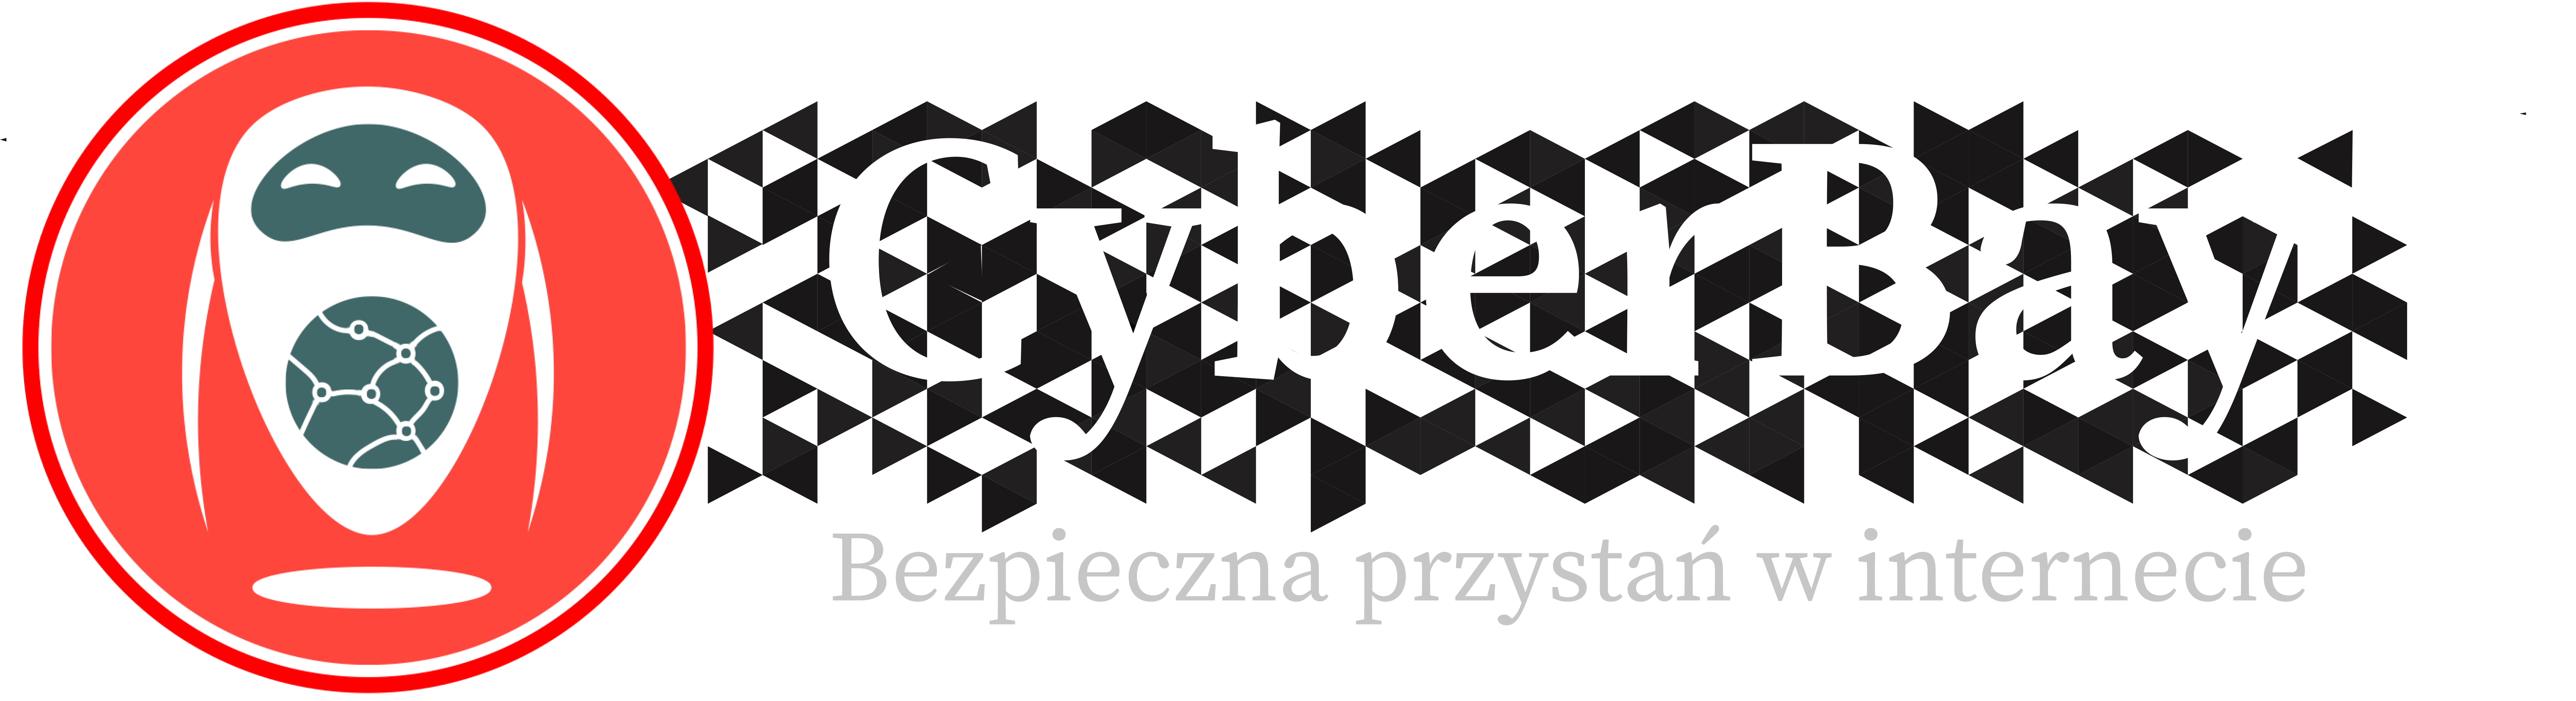 CyberBay